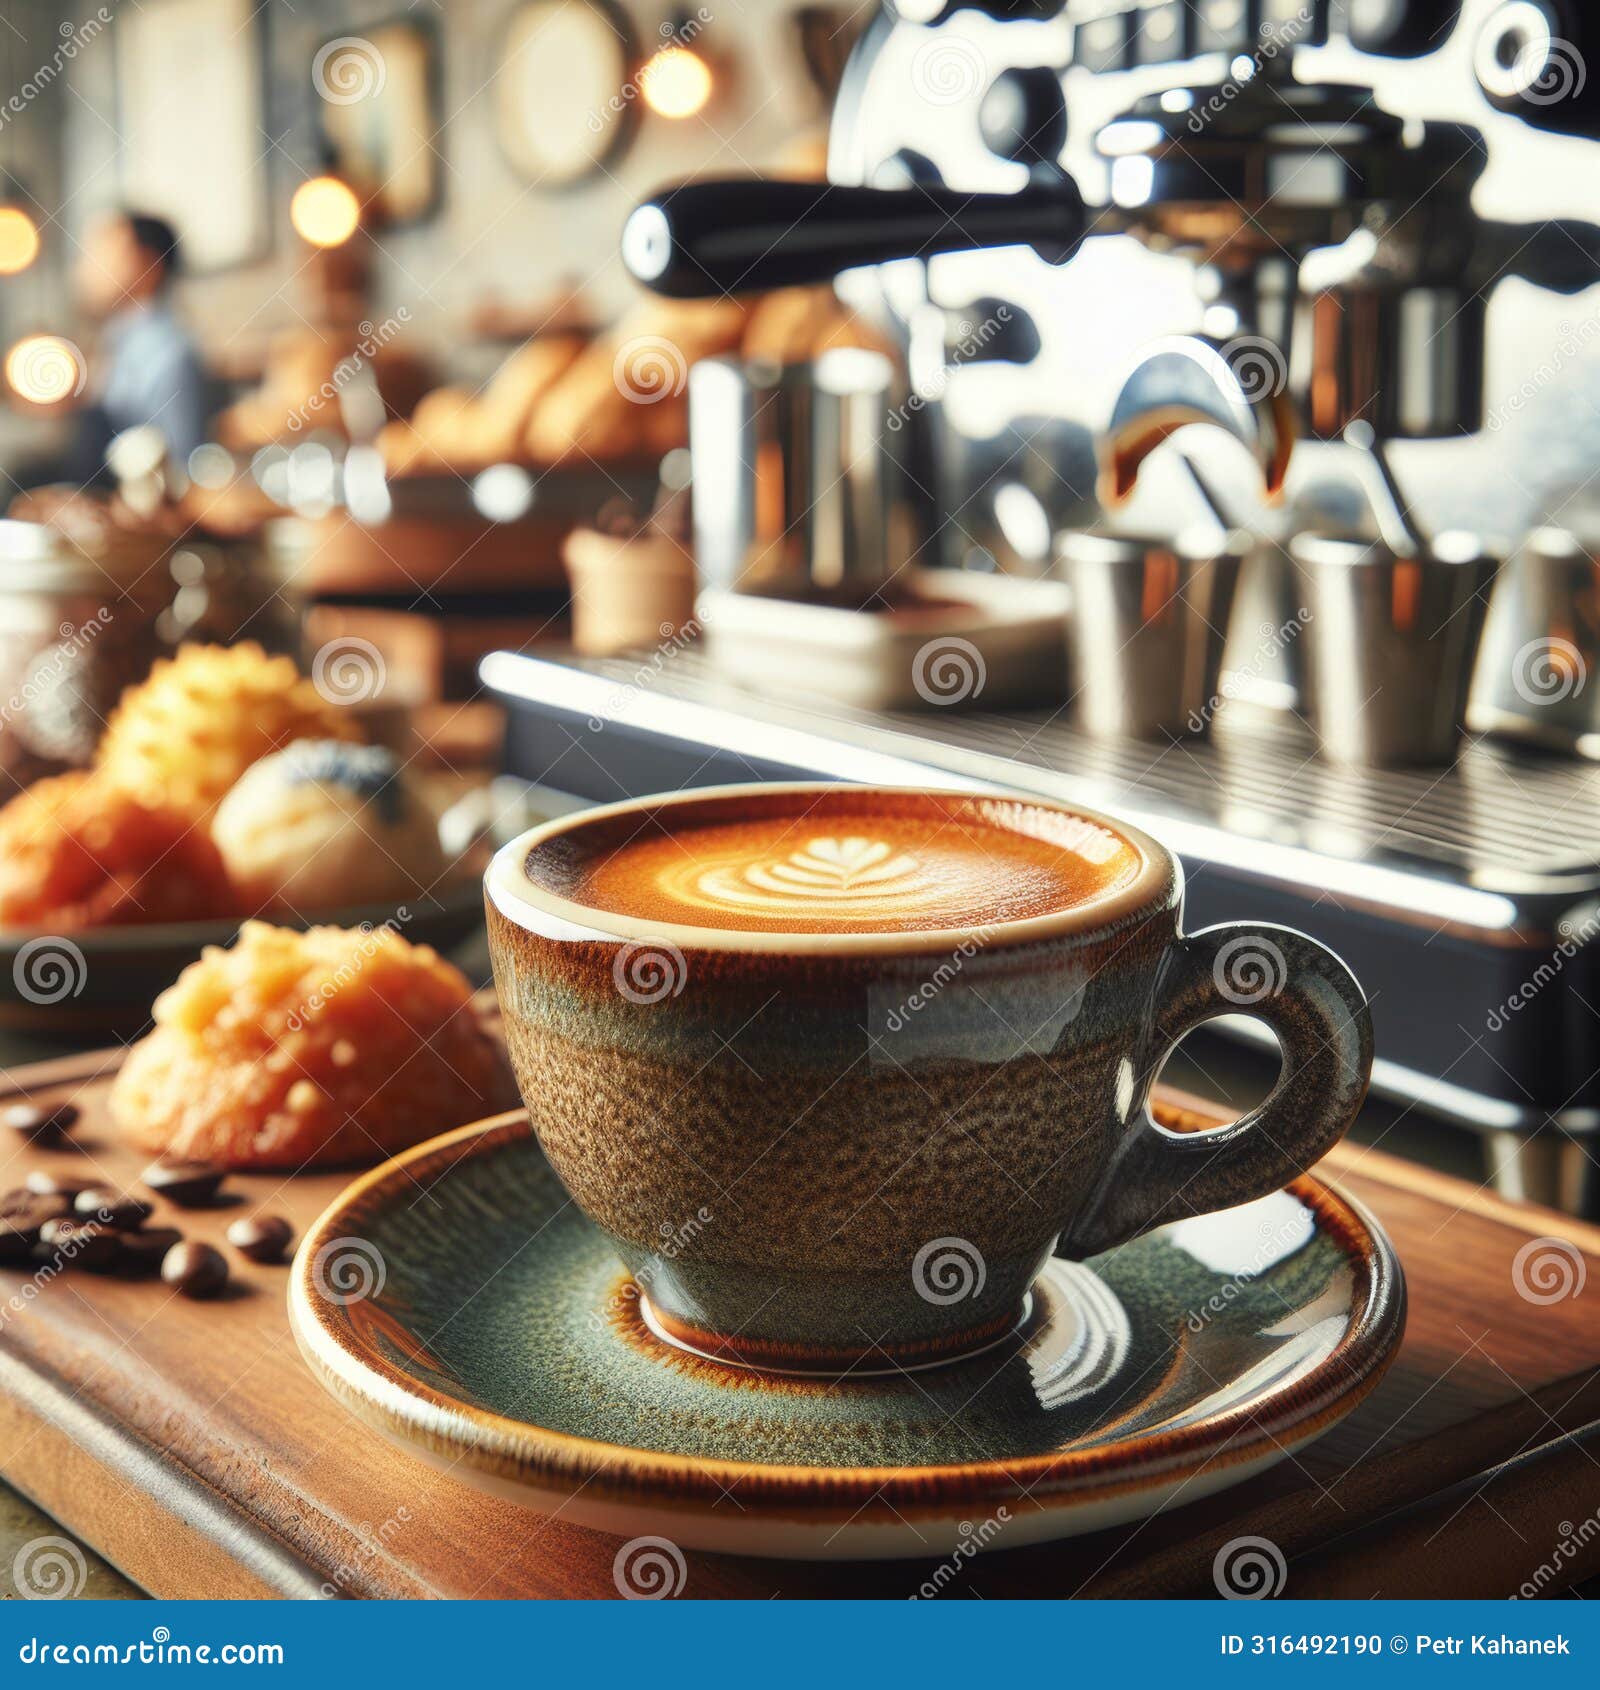 close-up of a doppio espresso with a blurred cafe background.. ai generated.